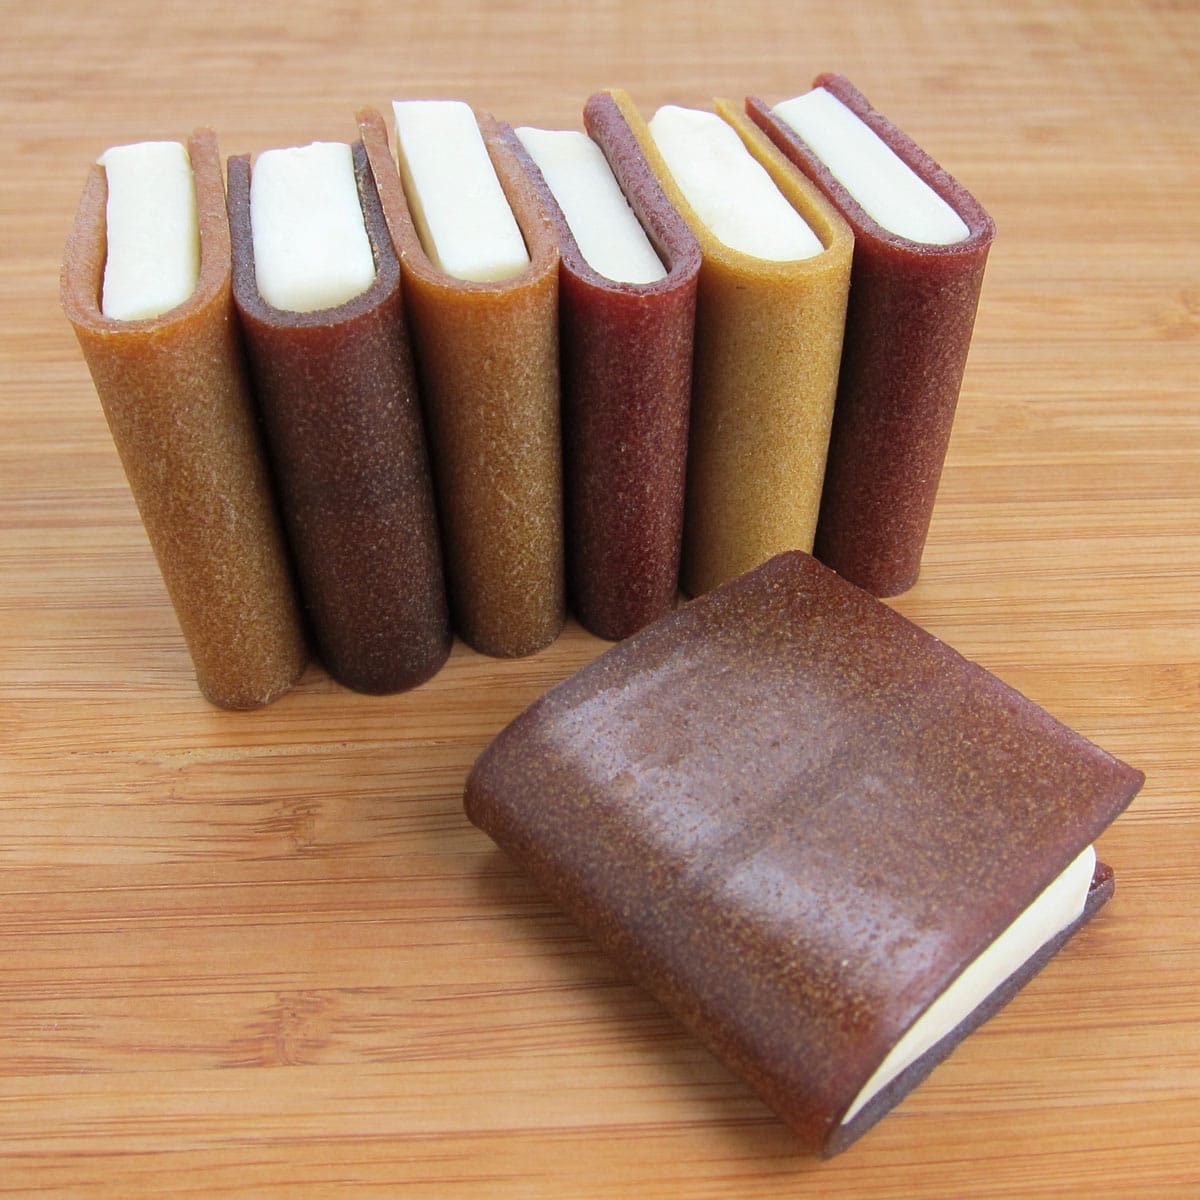 fruit leather school books.